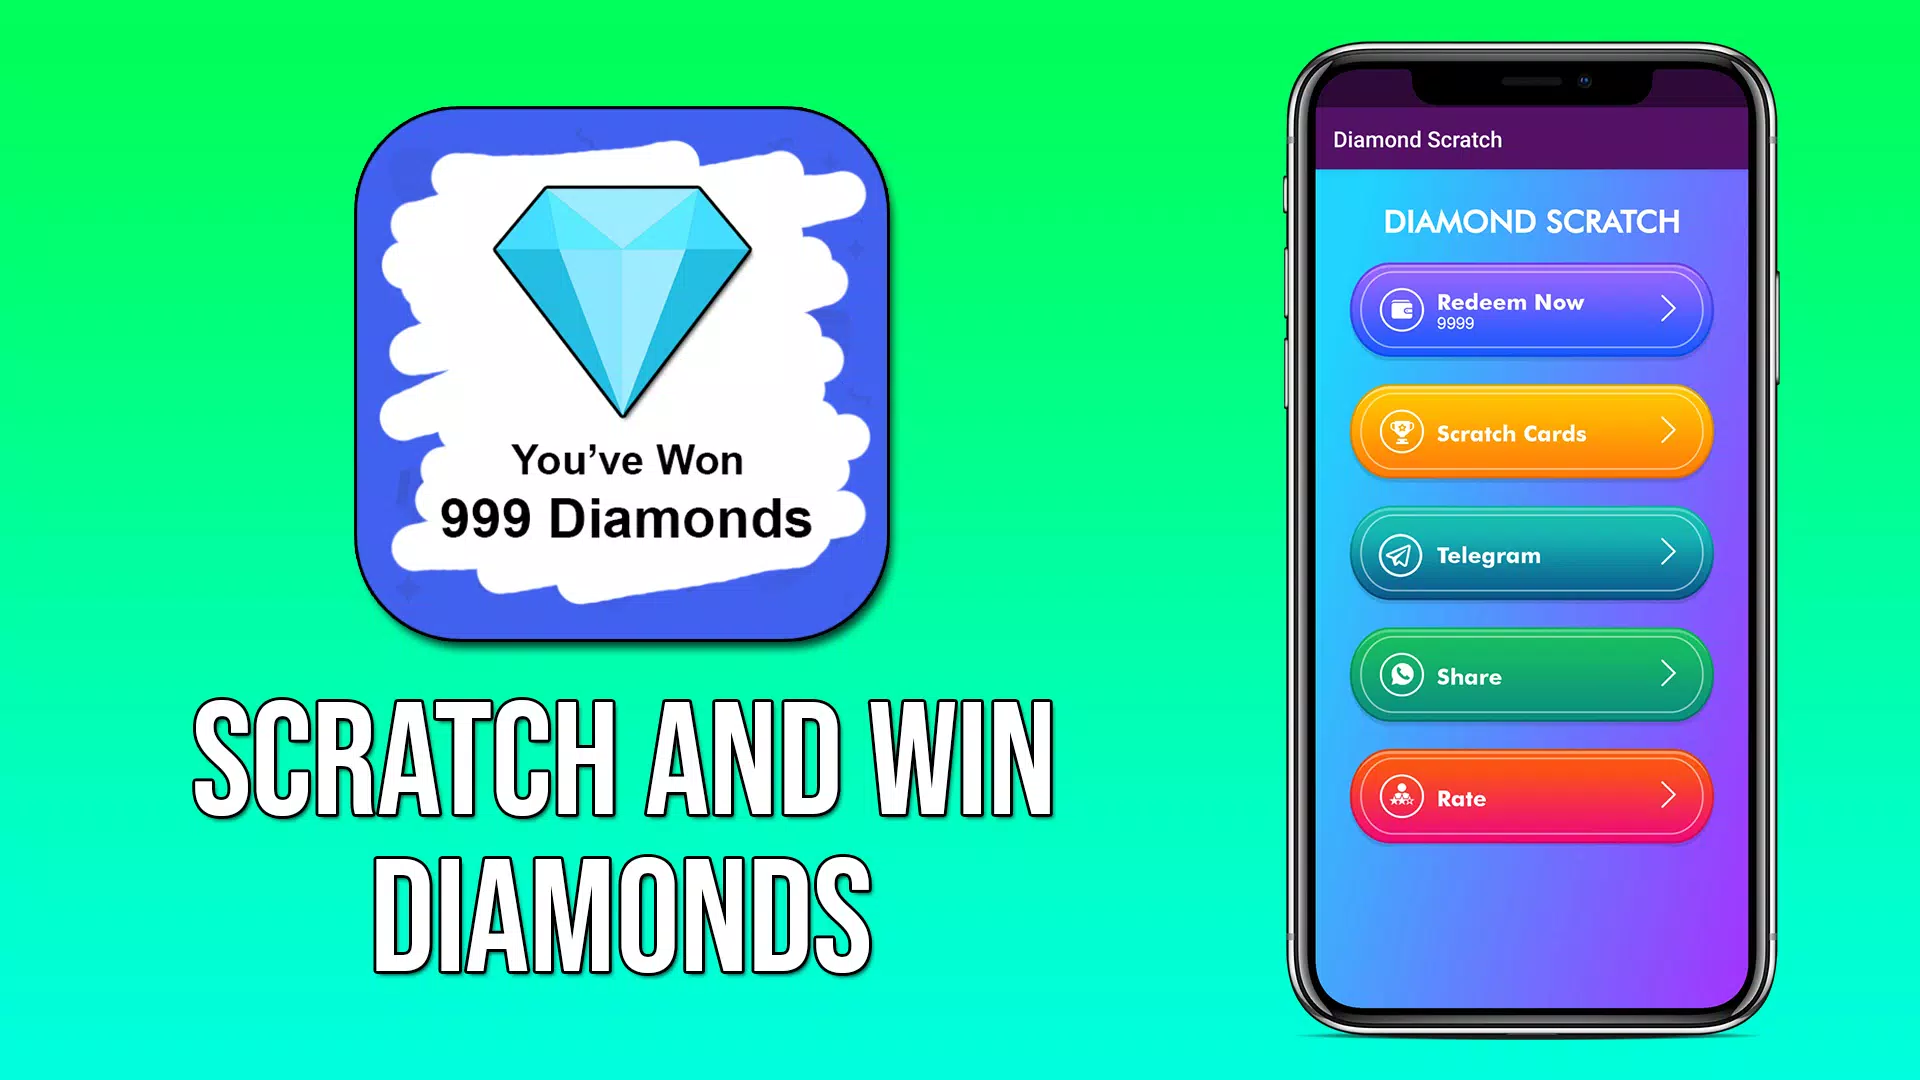 ff free diamond app｜TikTok Search